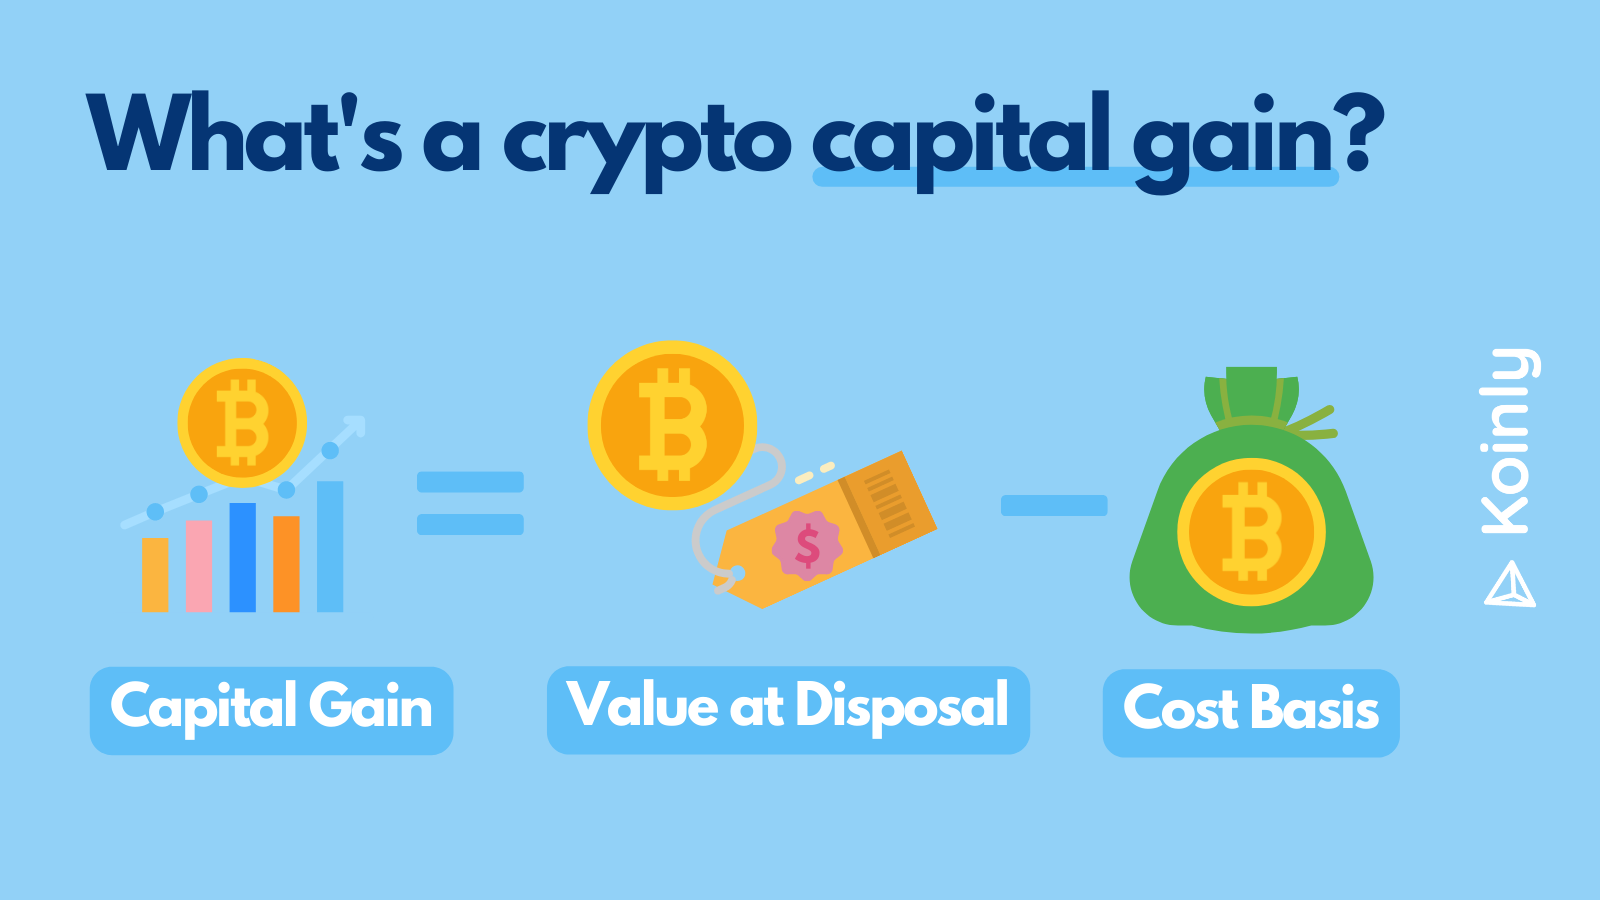 Capital gain or loss